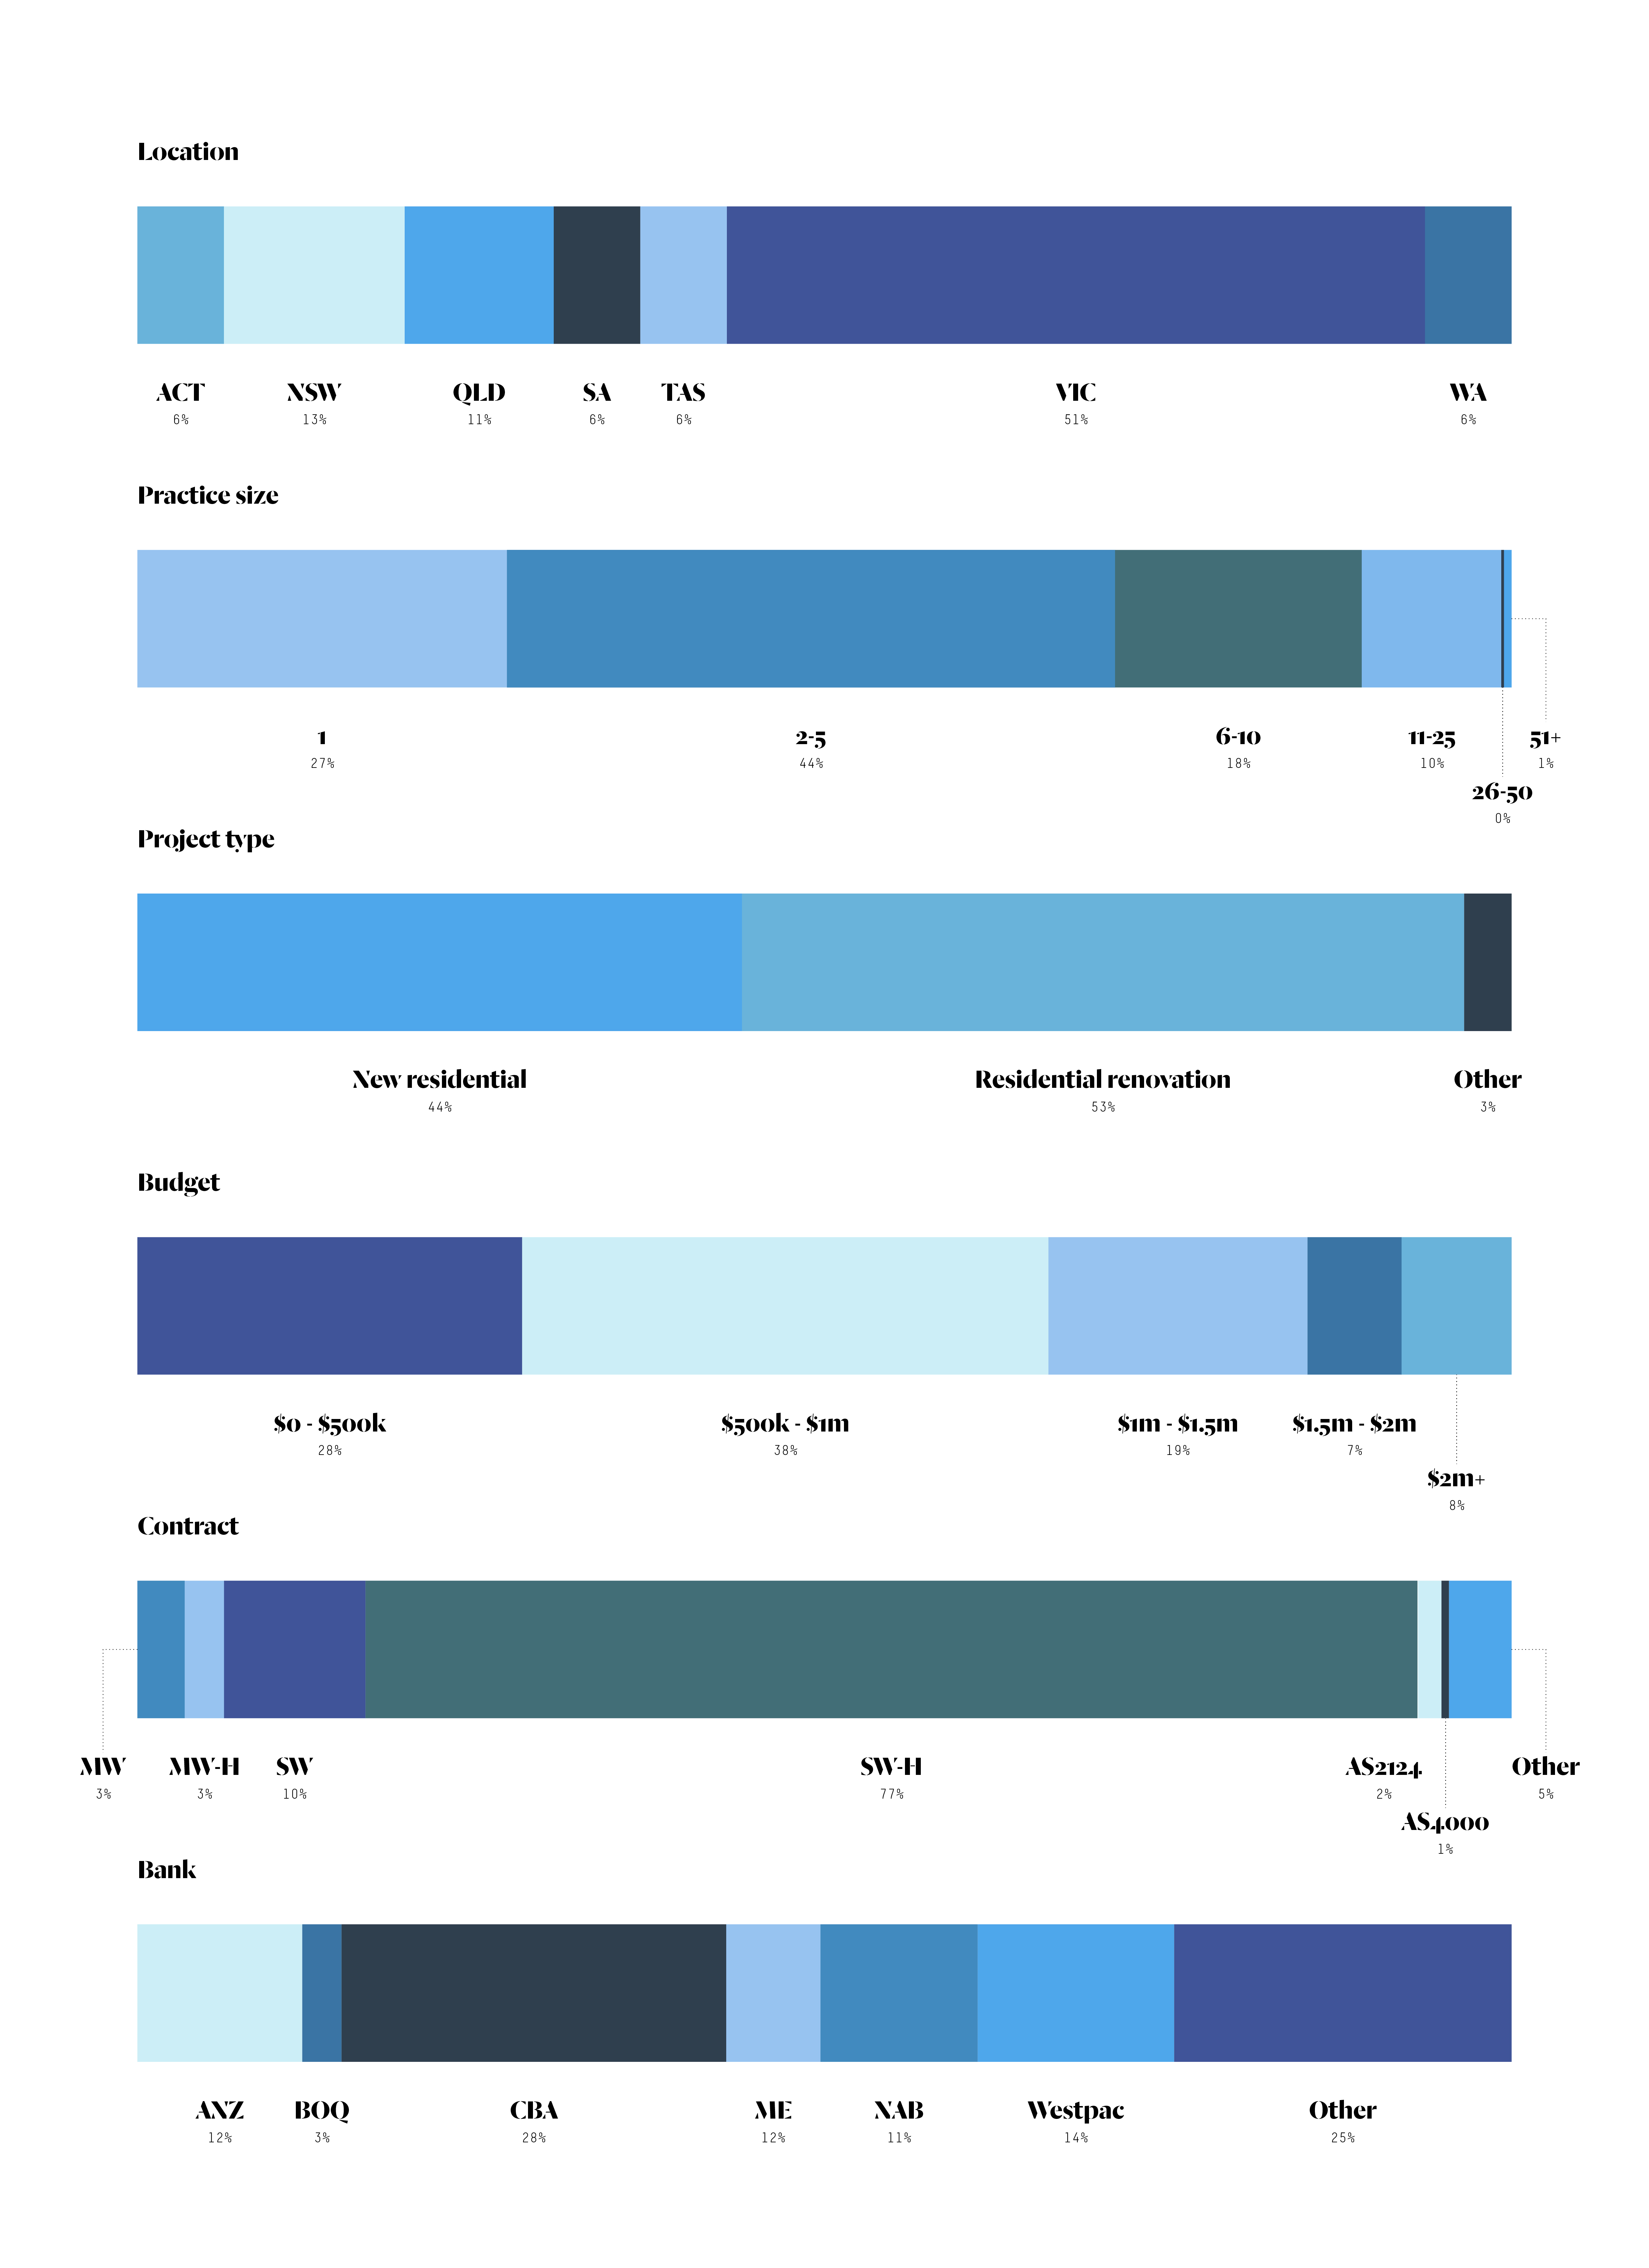 ABIC; Banks; Architects; Survey; Infographic